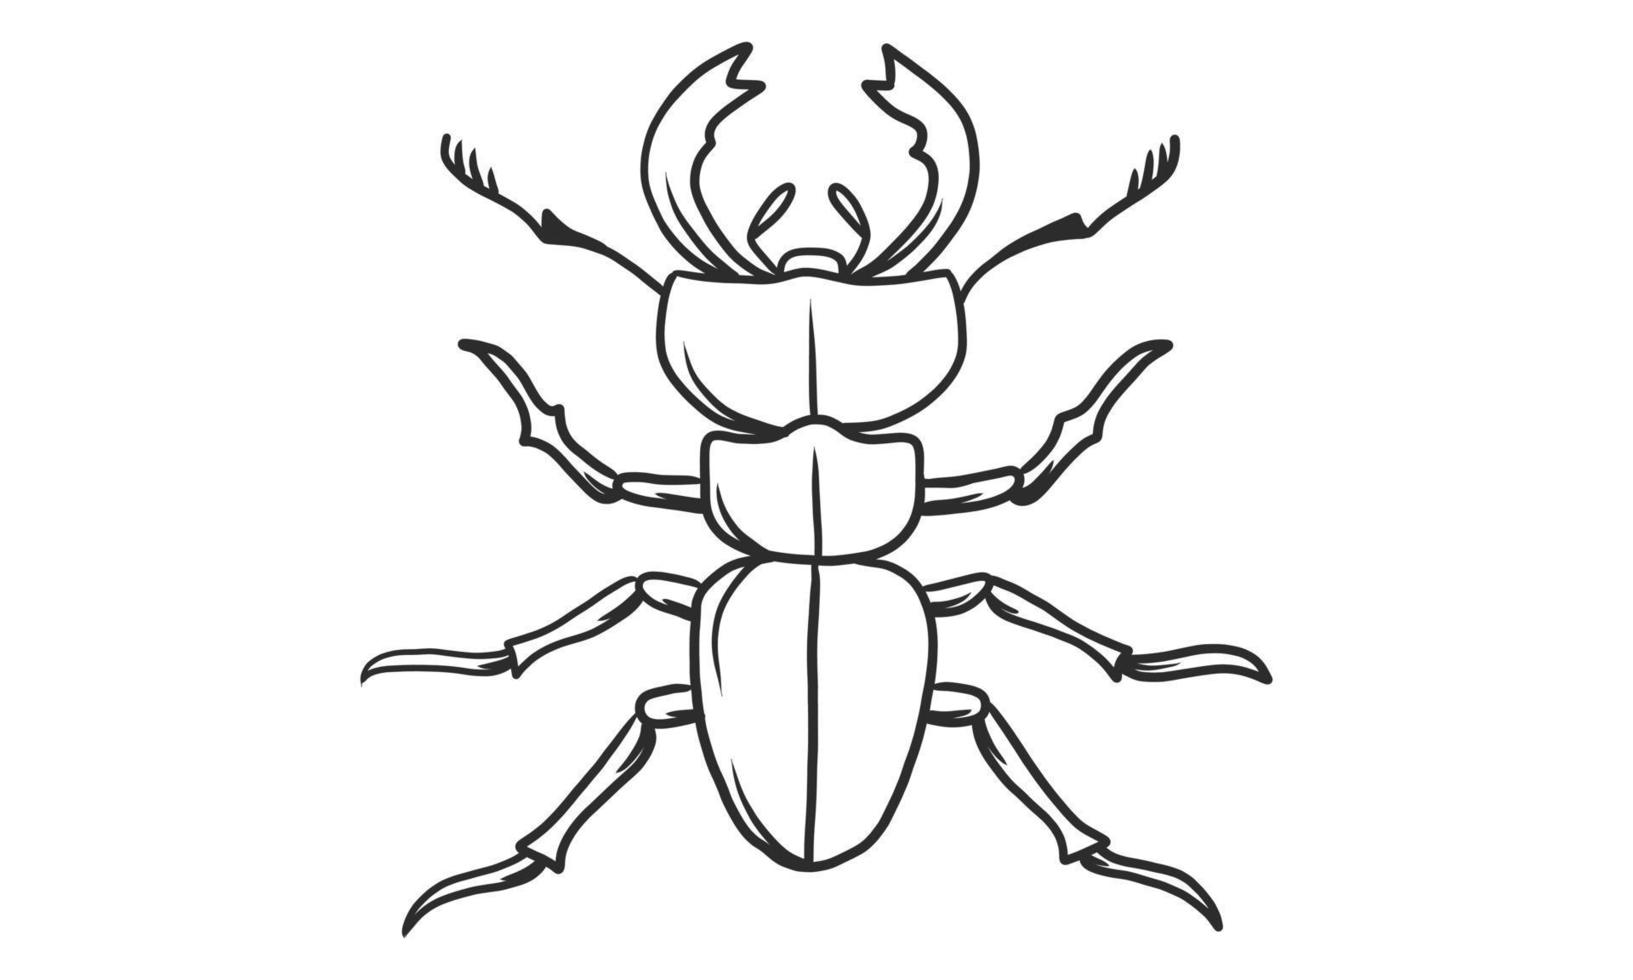 vector lineart illustratie van kevers op witte achtergrond, hand getrokken Japanse gehoornde kever bug insect sketch